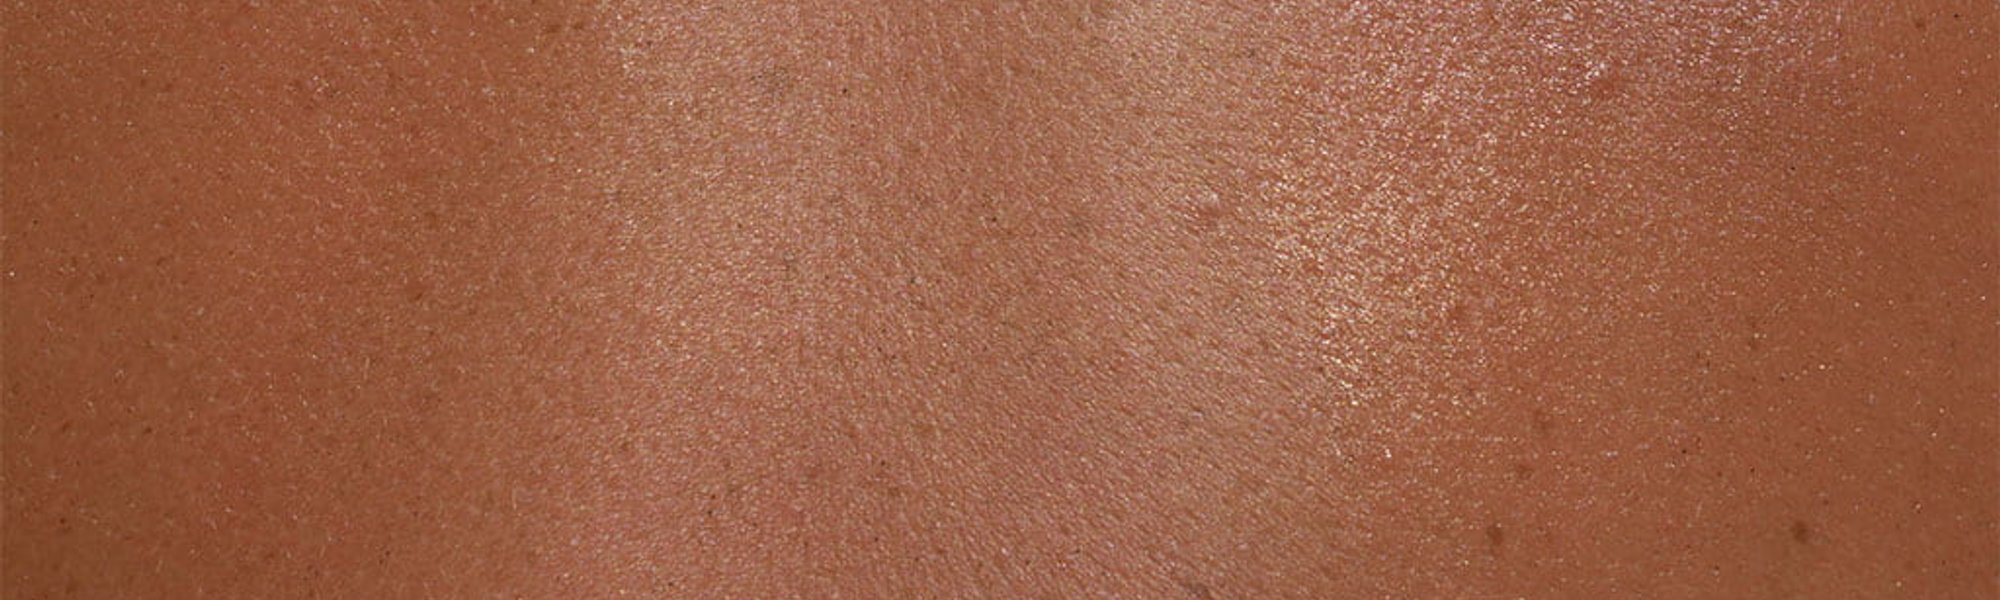 Larocheposay ArticlePage Allergic Skin allergy sensitive skin and reac